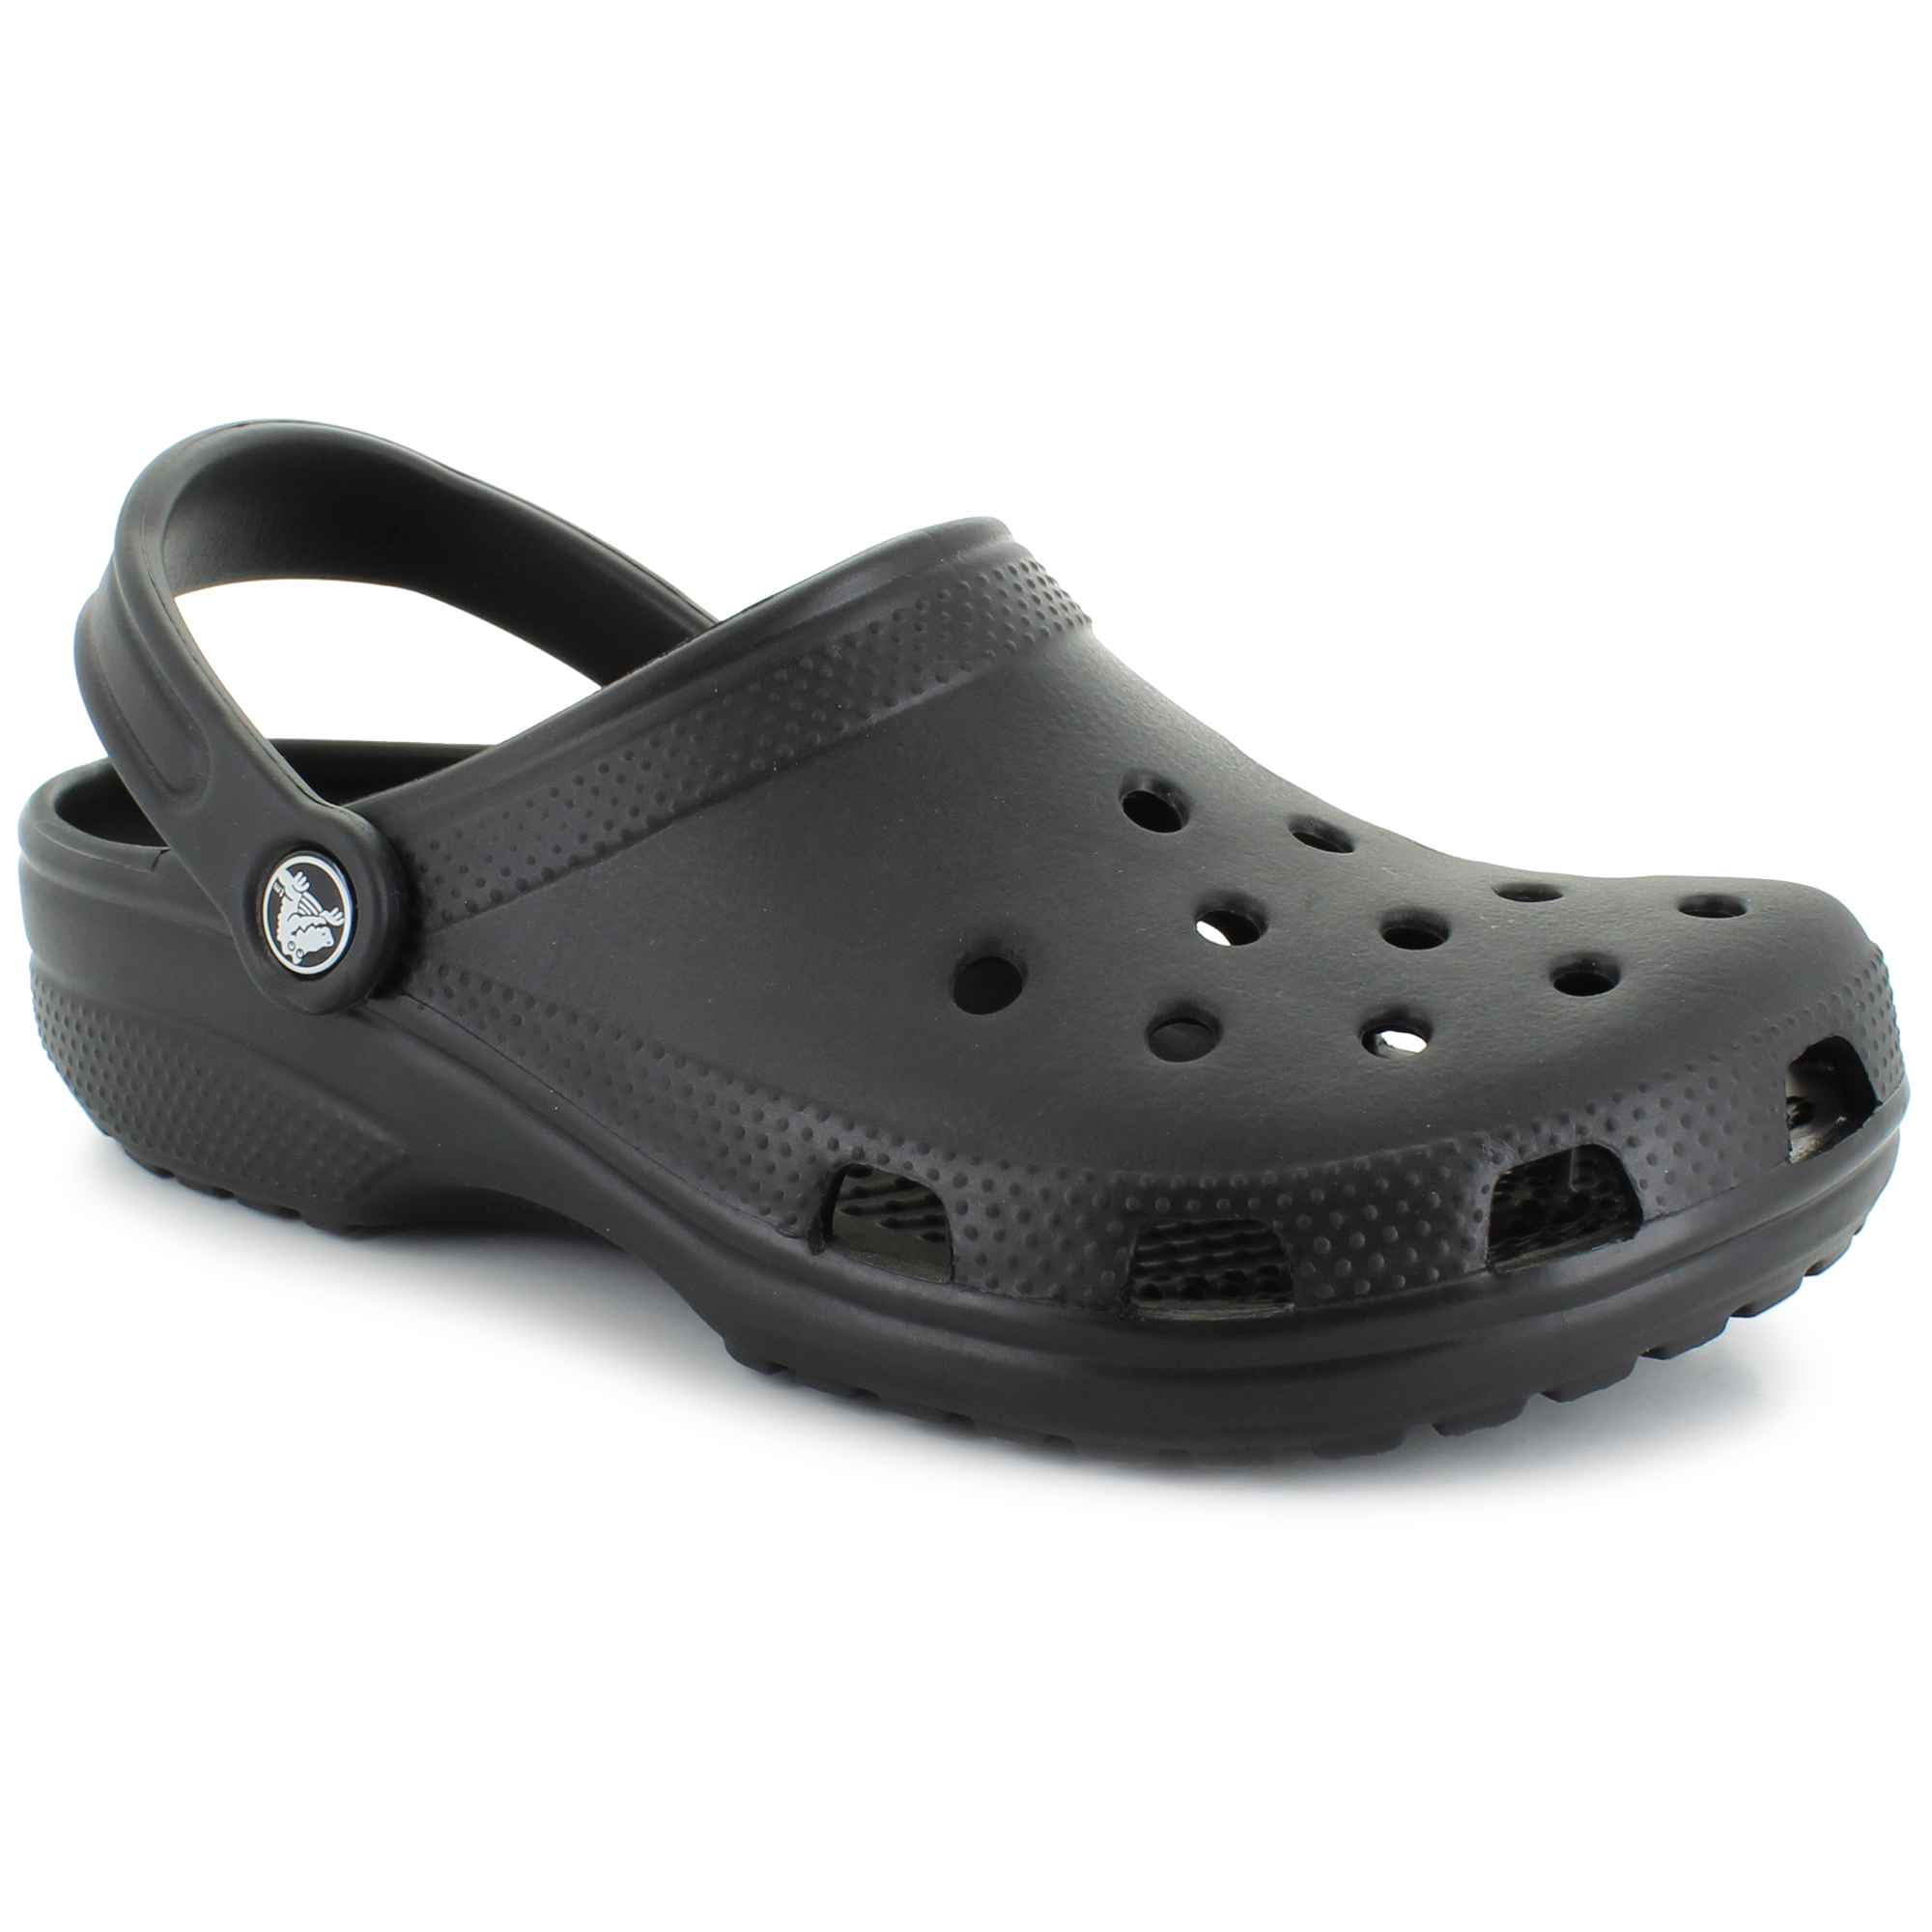 white crocs shoe dept